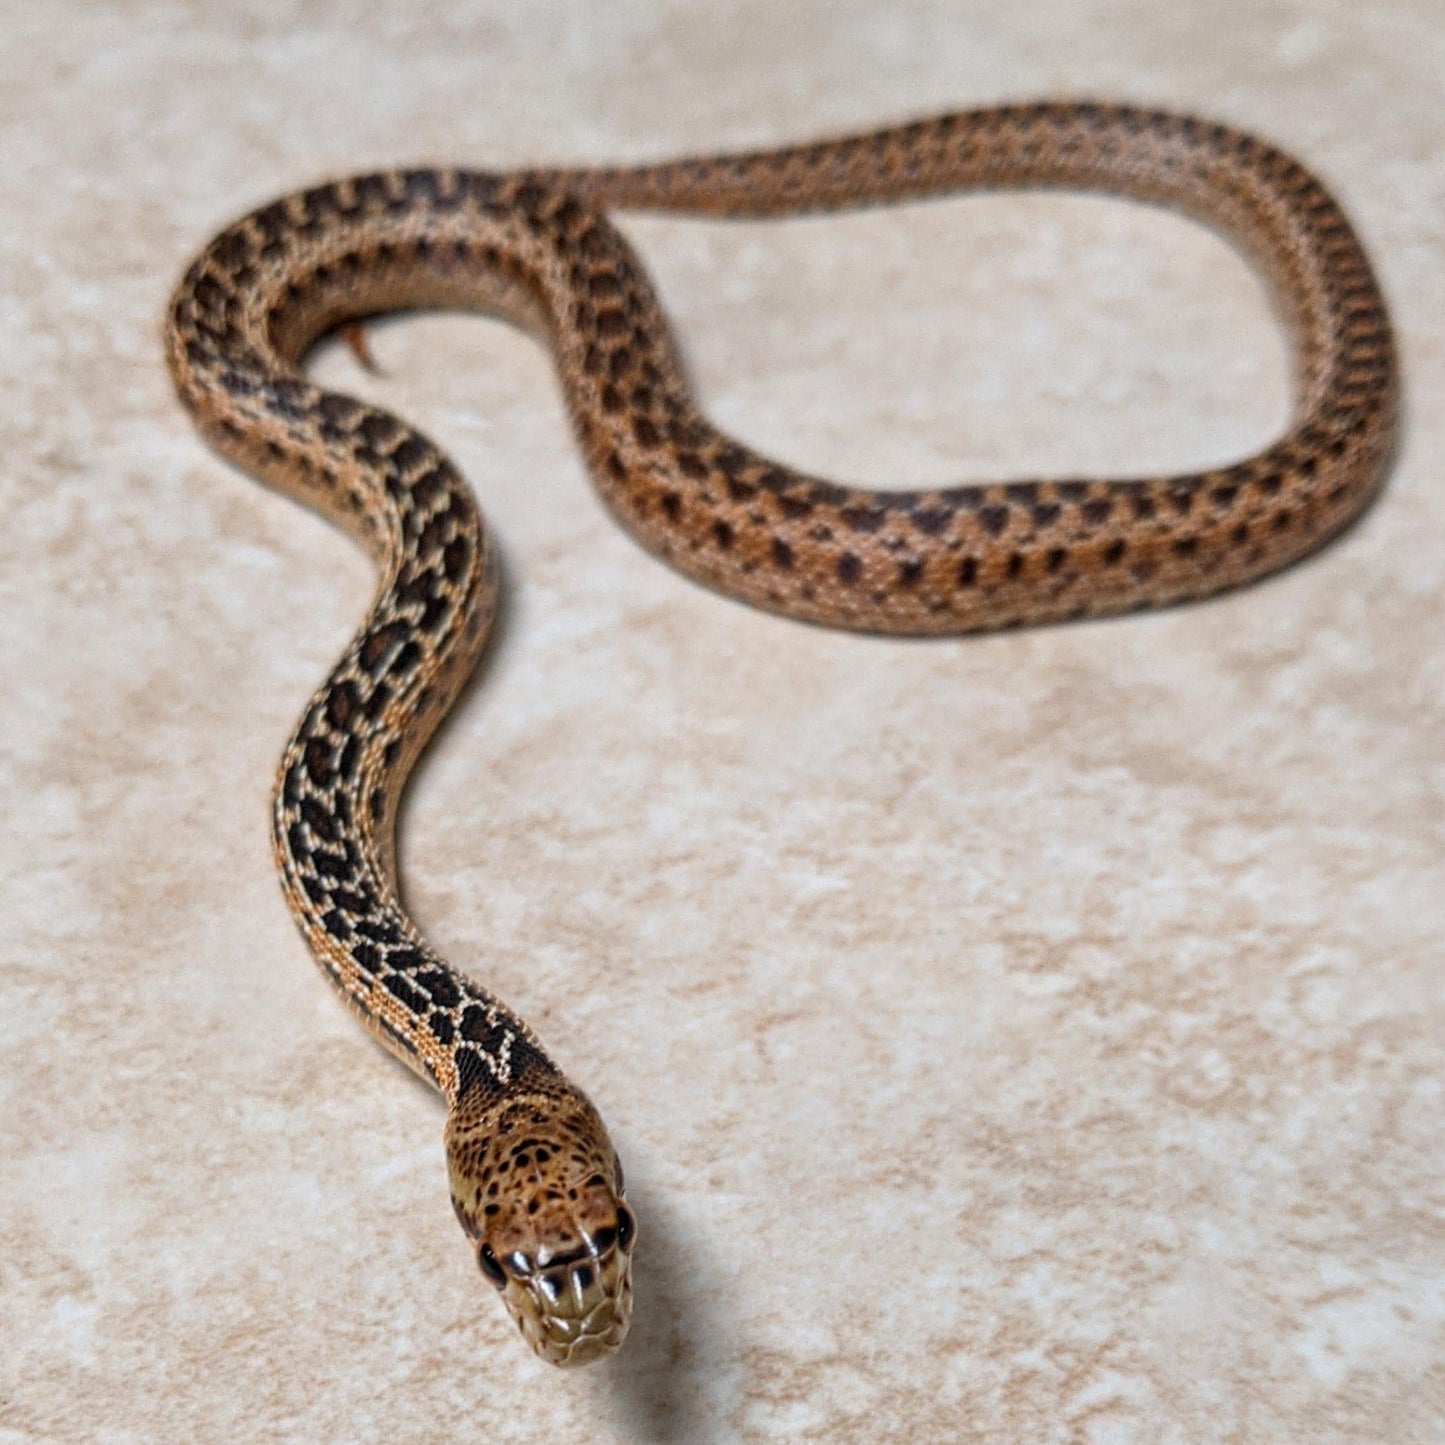 San Diego Het Stripe Applegate Gopher Snake - Female